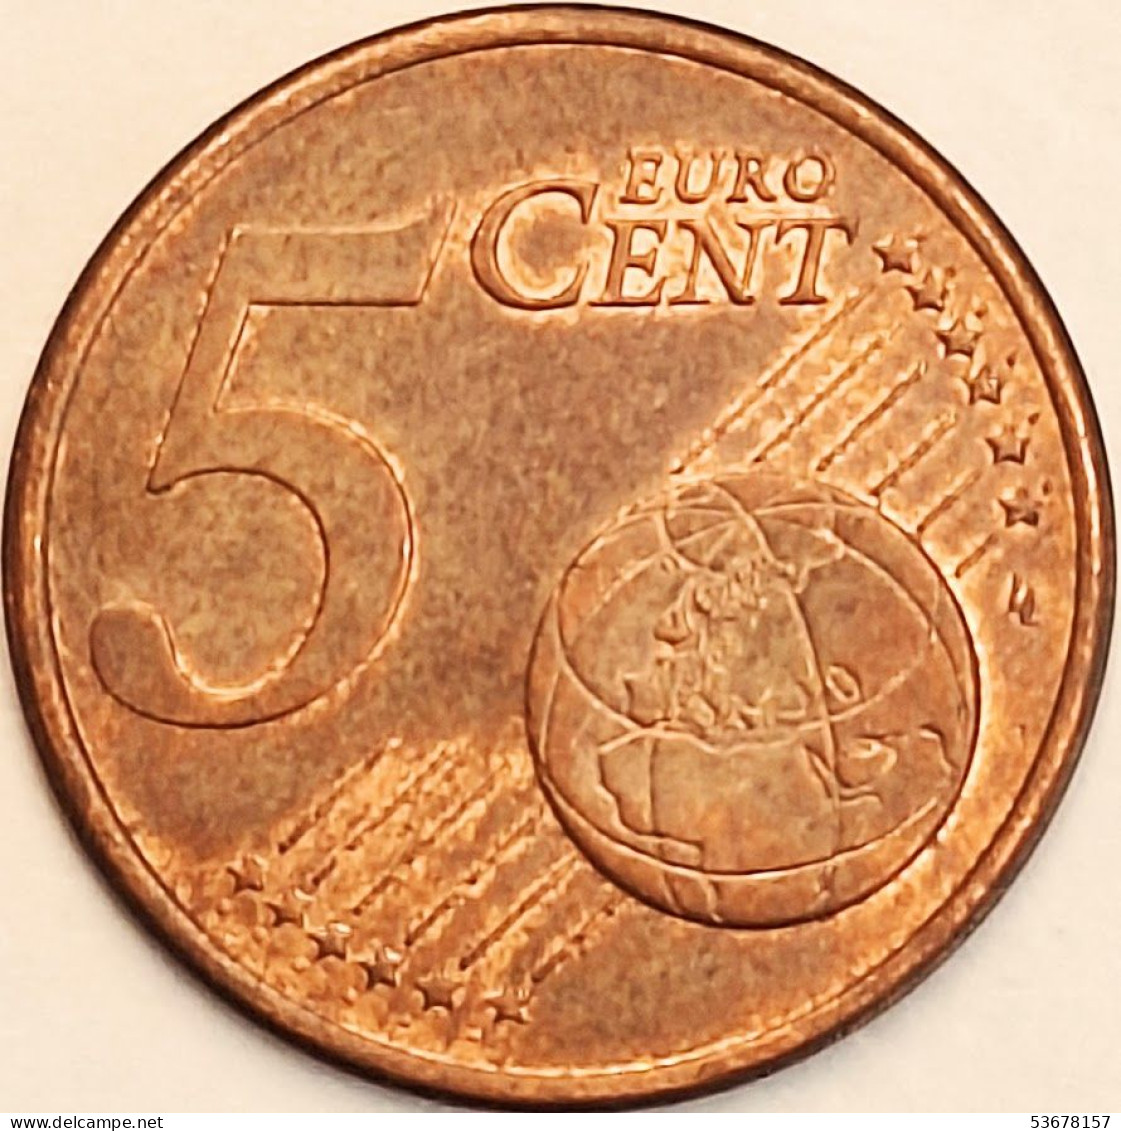 France - 5 Euro Cent 2008, KM# 1284 (#4384) - Francia